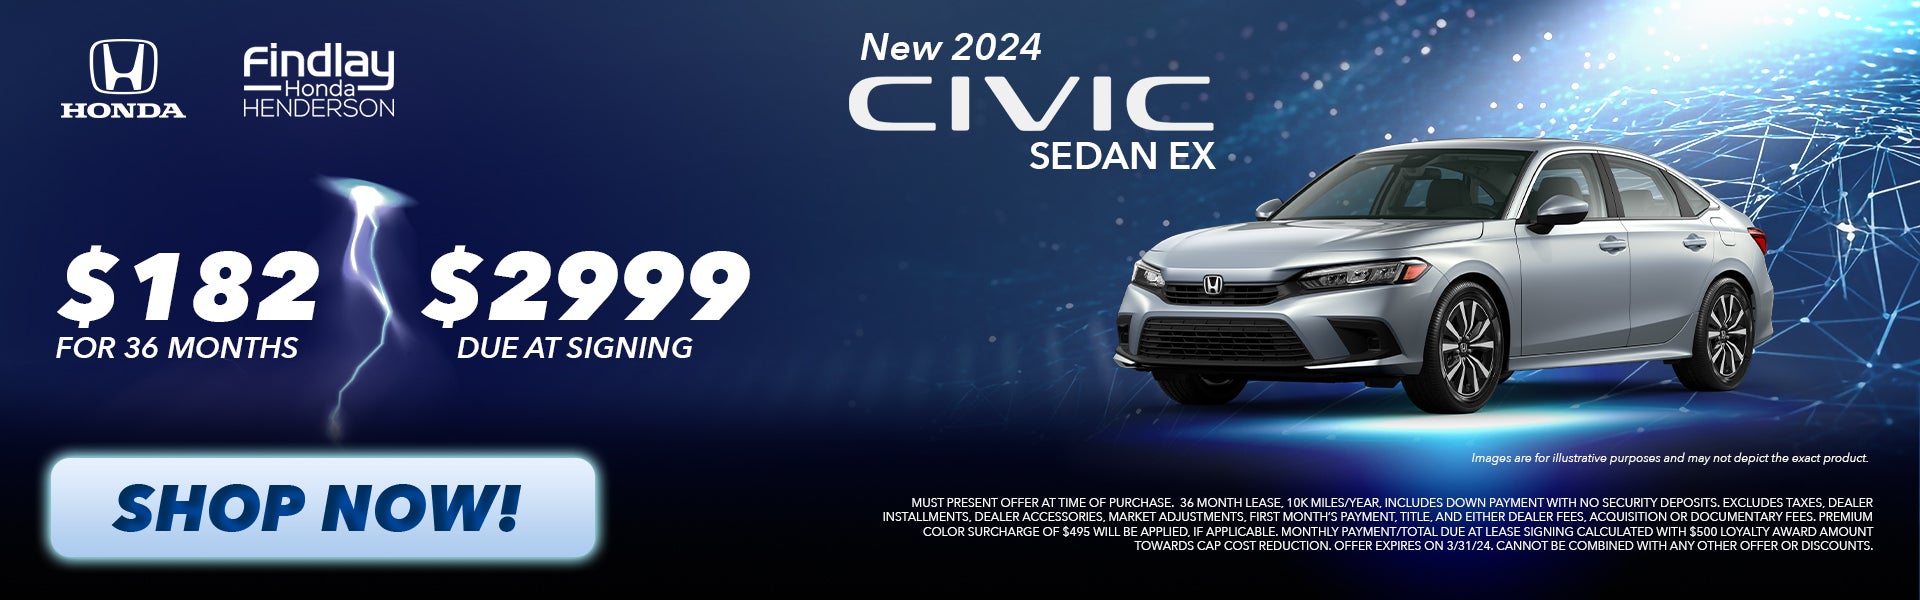 2024 Civic Sedan EX